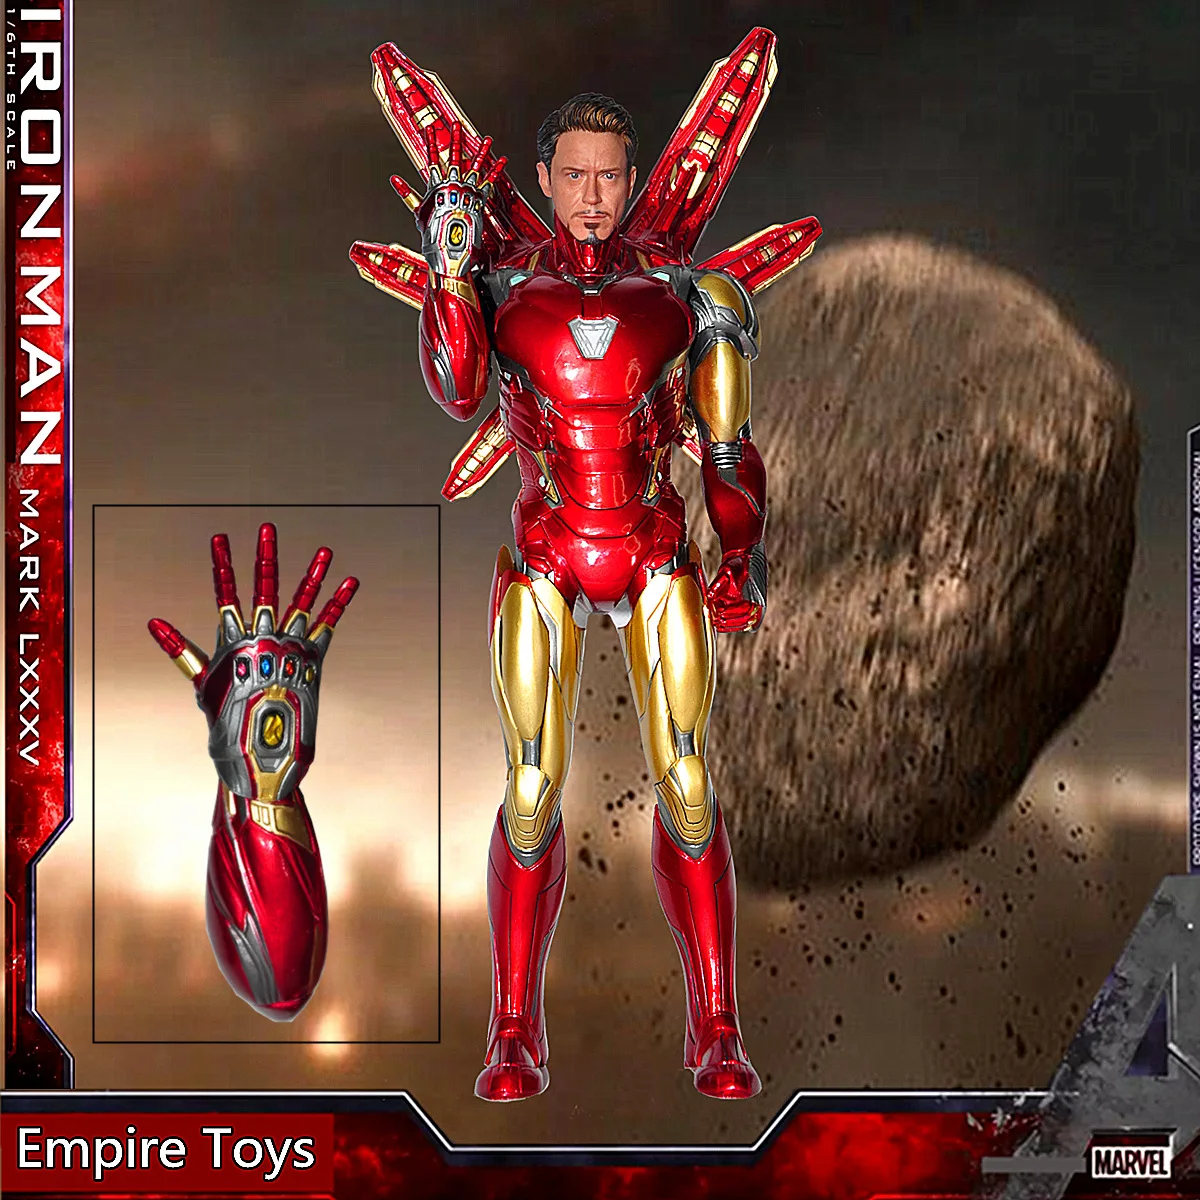 

Marvel Avengers Endgame Final Battle Statue Ironman Super Hero Iron Man MK85 1/6 Scale Collectible Figure Models Toys 33cm